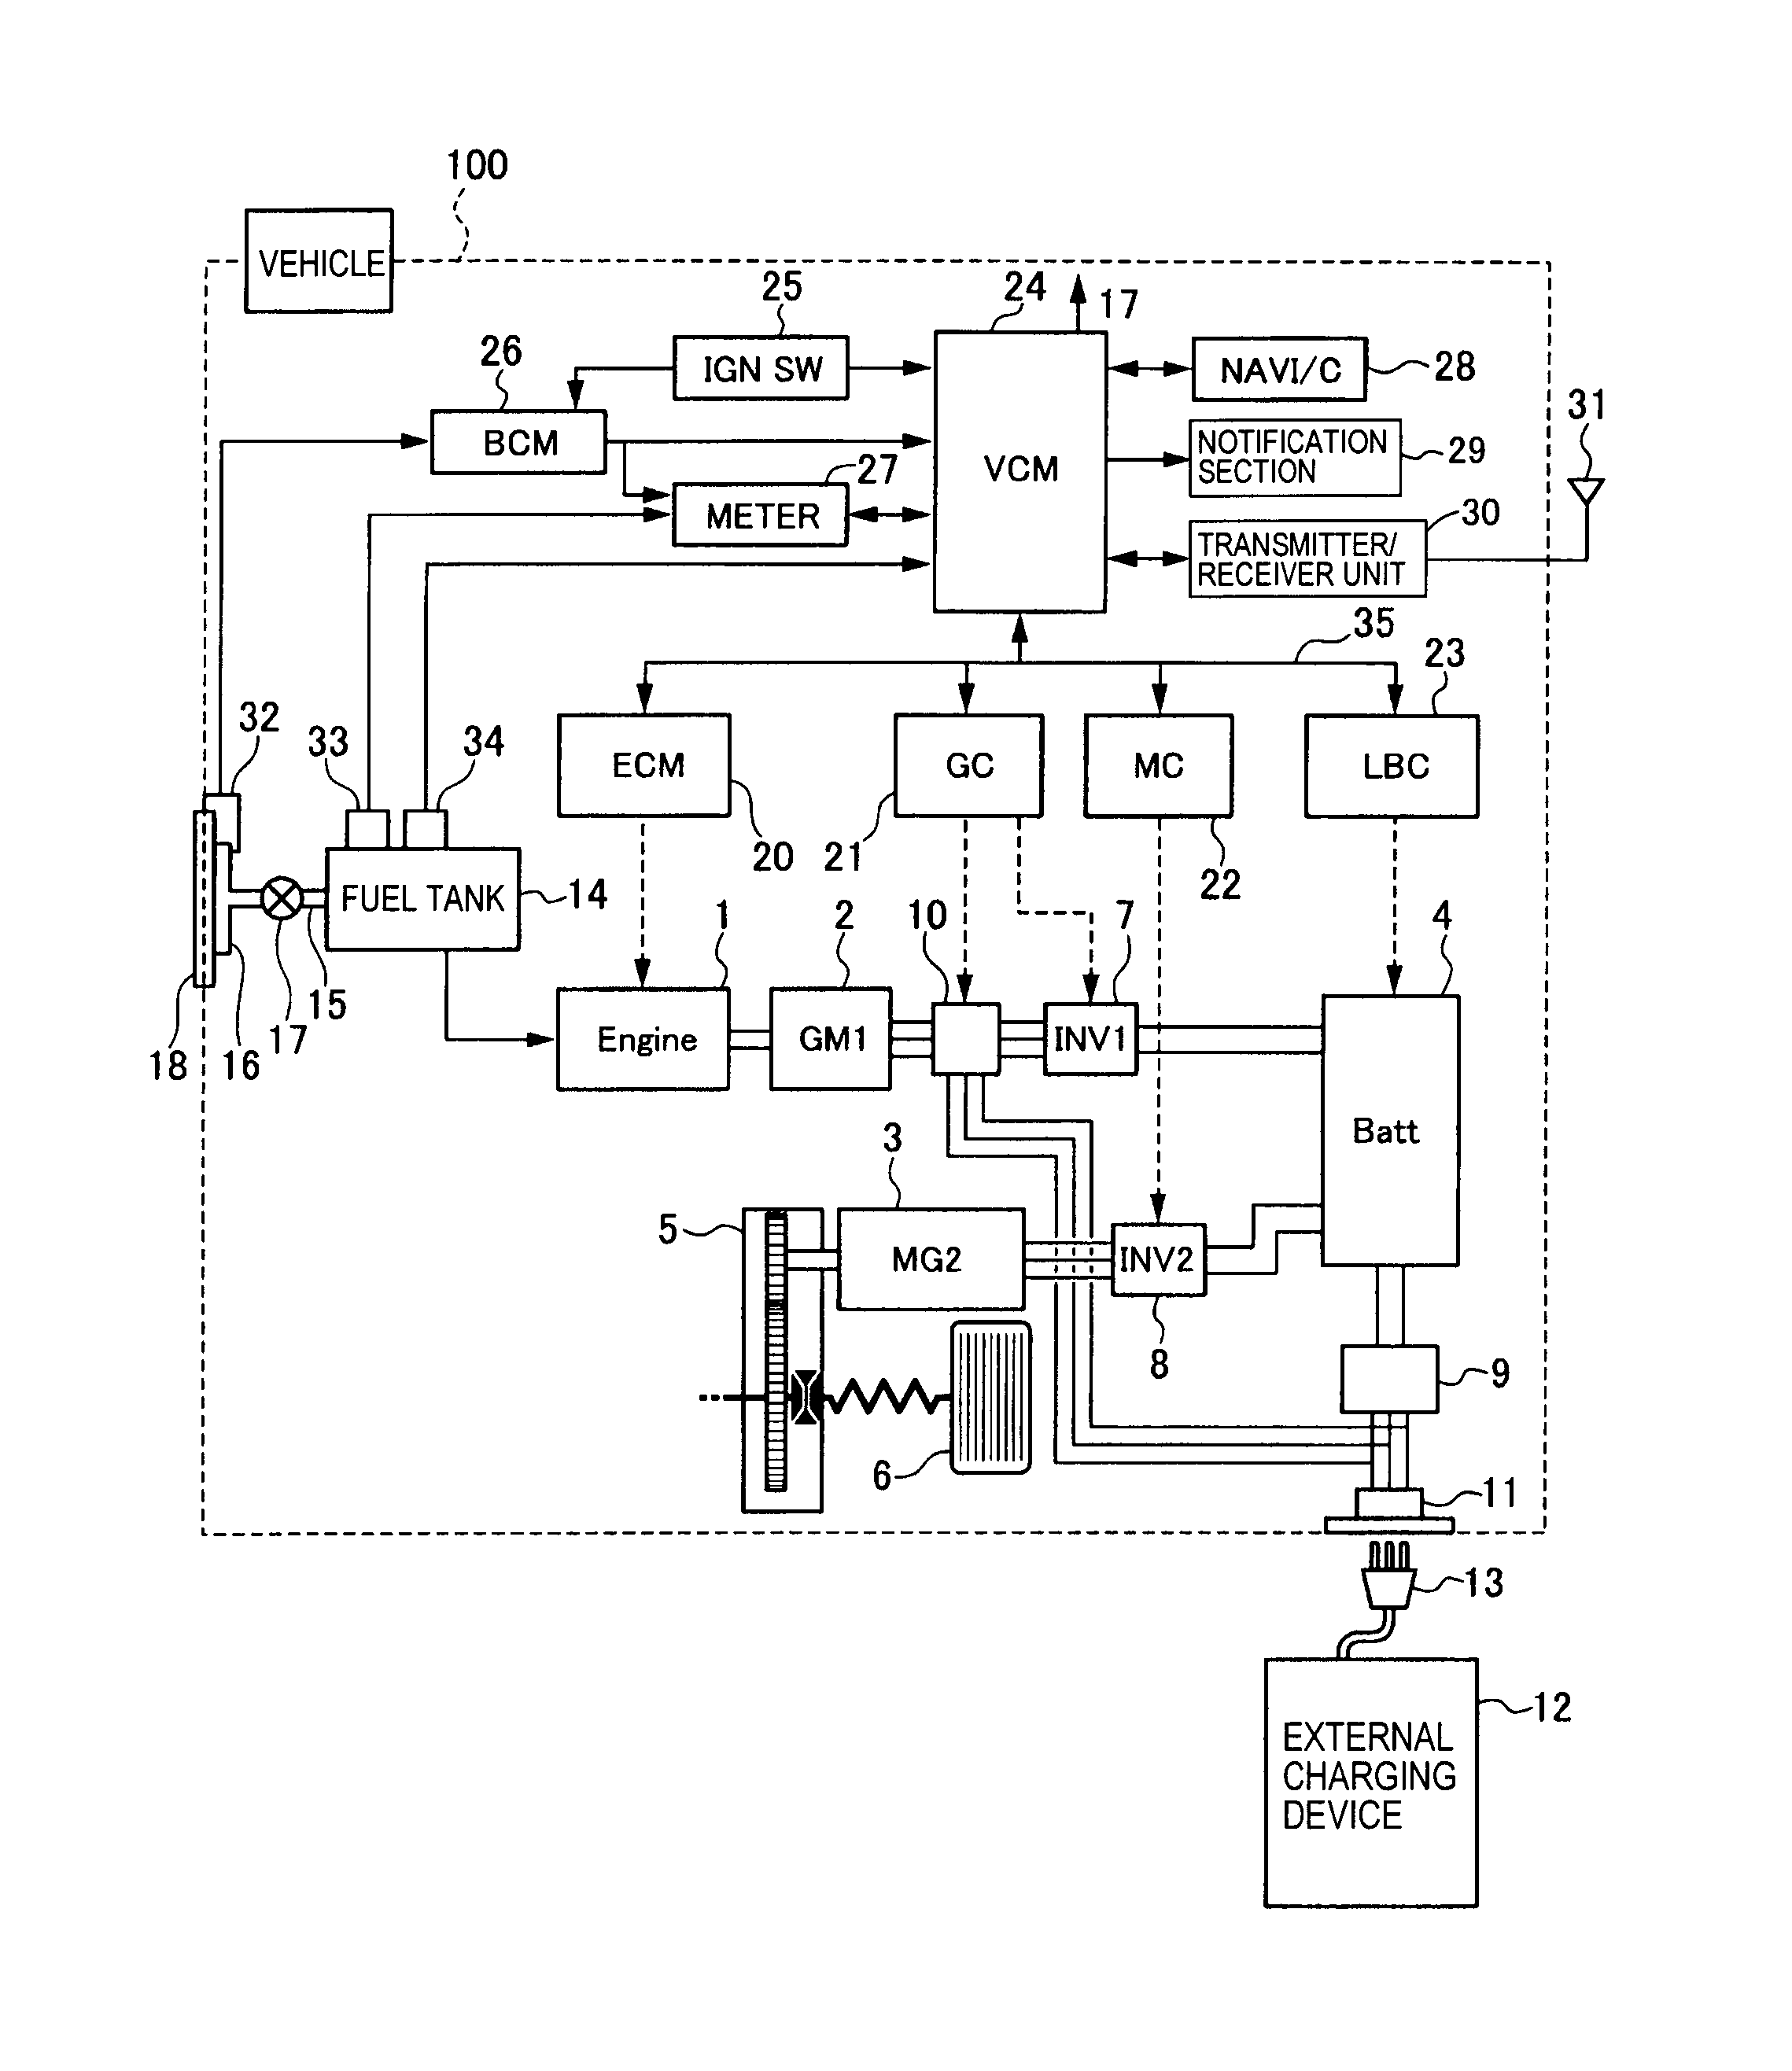 reese brakeman digital wiring diagram